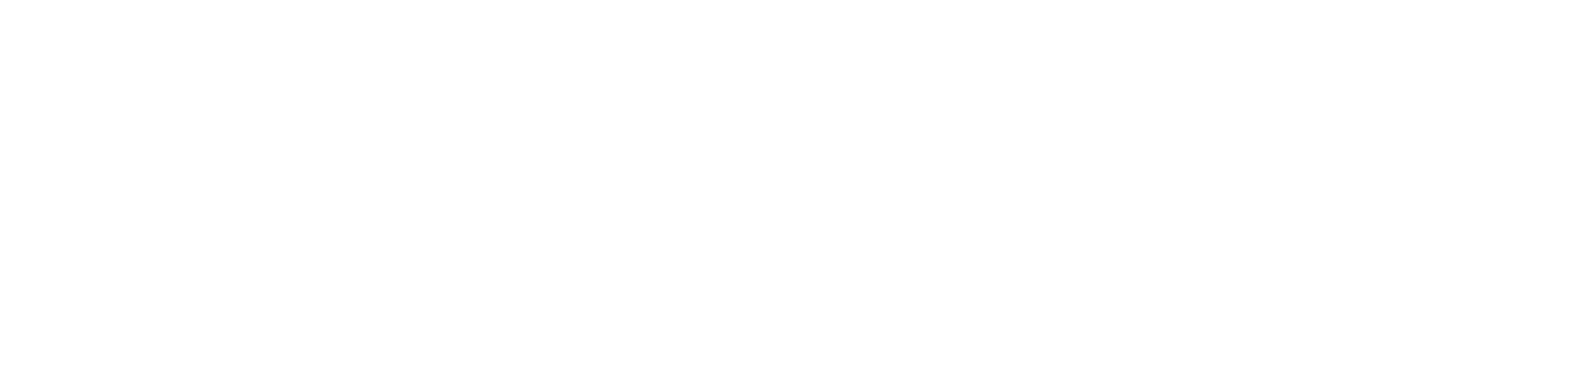 SKF (Svenska Kullagerfabriken) logo large for dark backgrounds (transparent PNG)